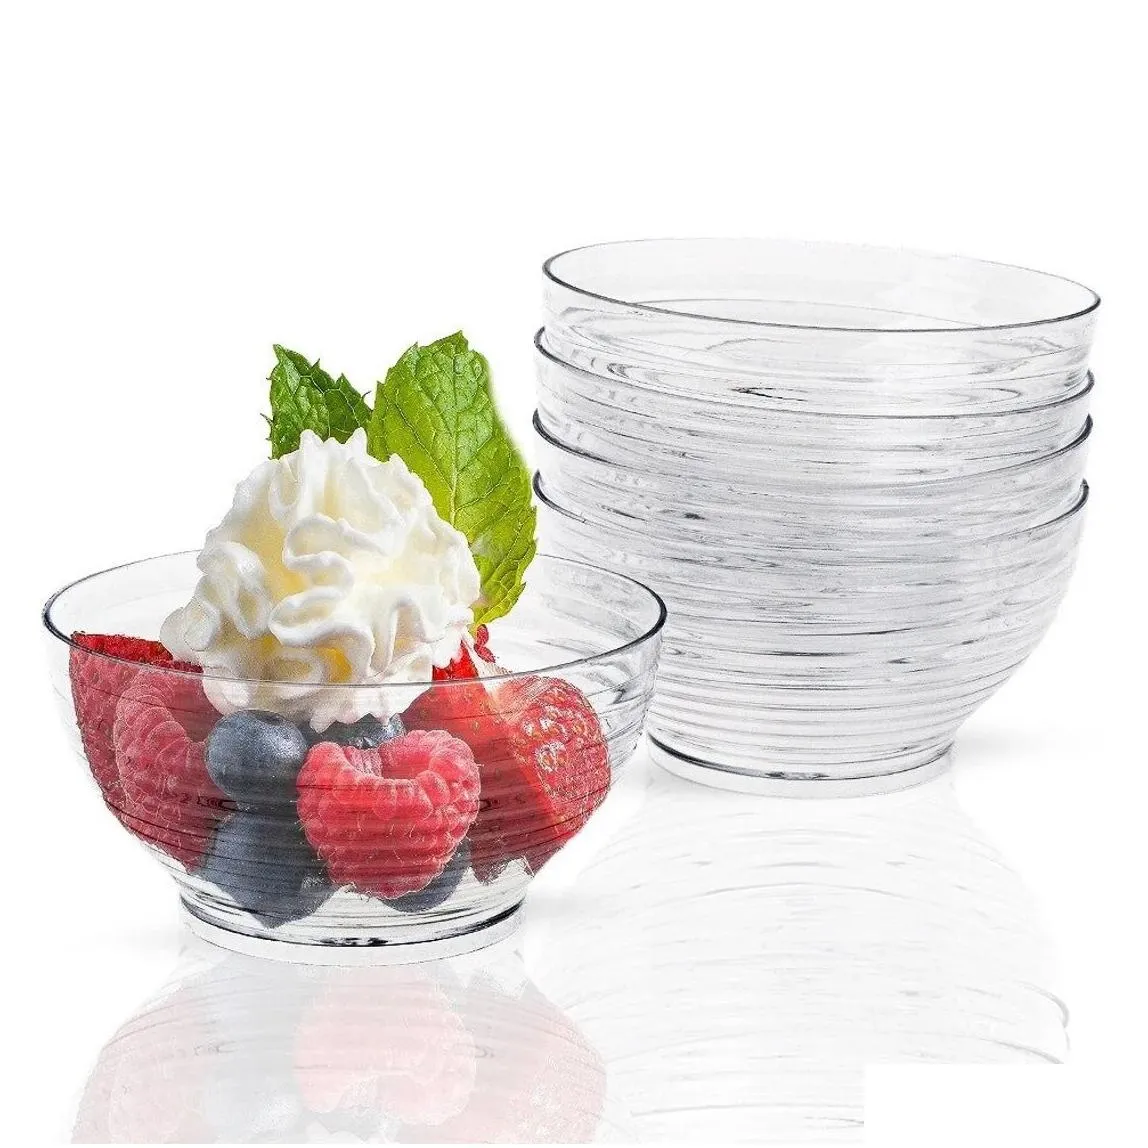 40 pieces - party supplies disposable plastic tableware 2oz/2.8x1.4in60ml/72x35mm mini dessert bowl